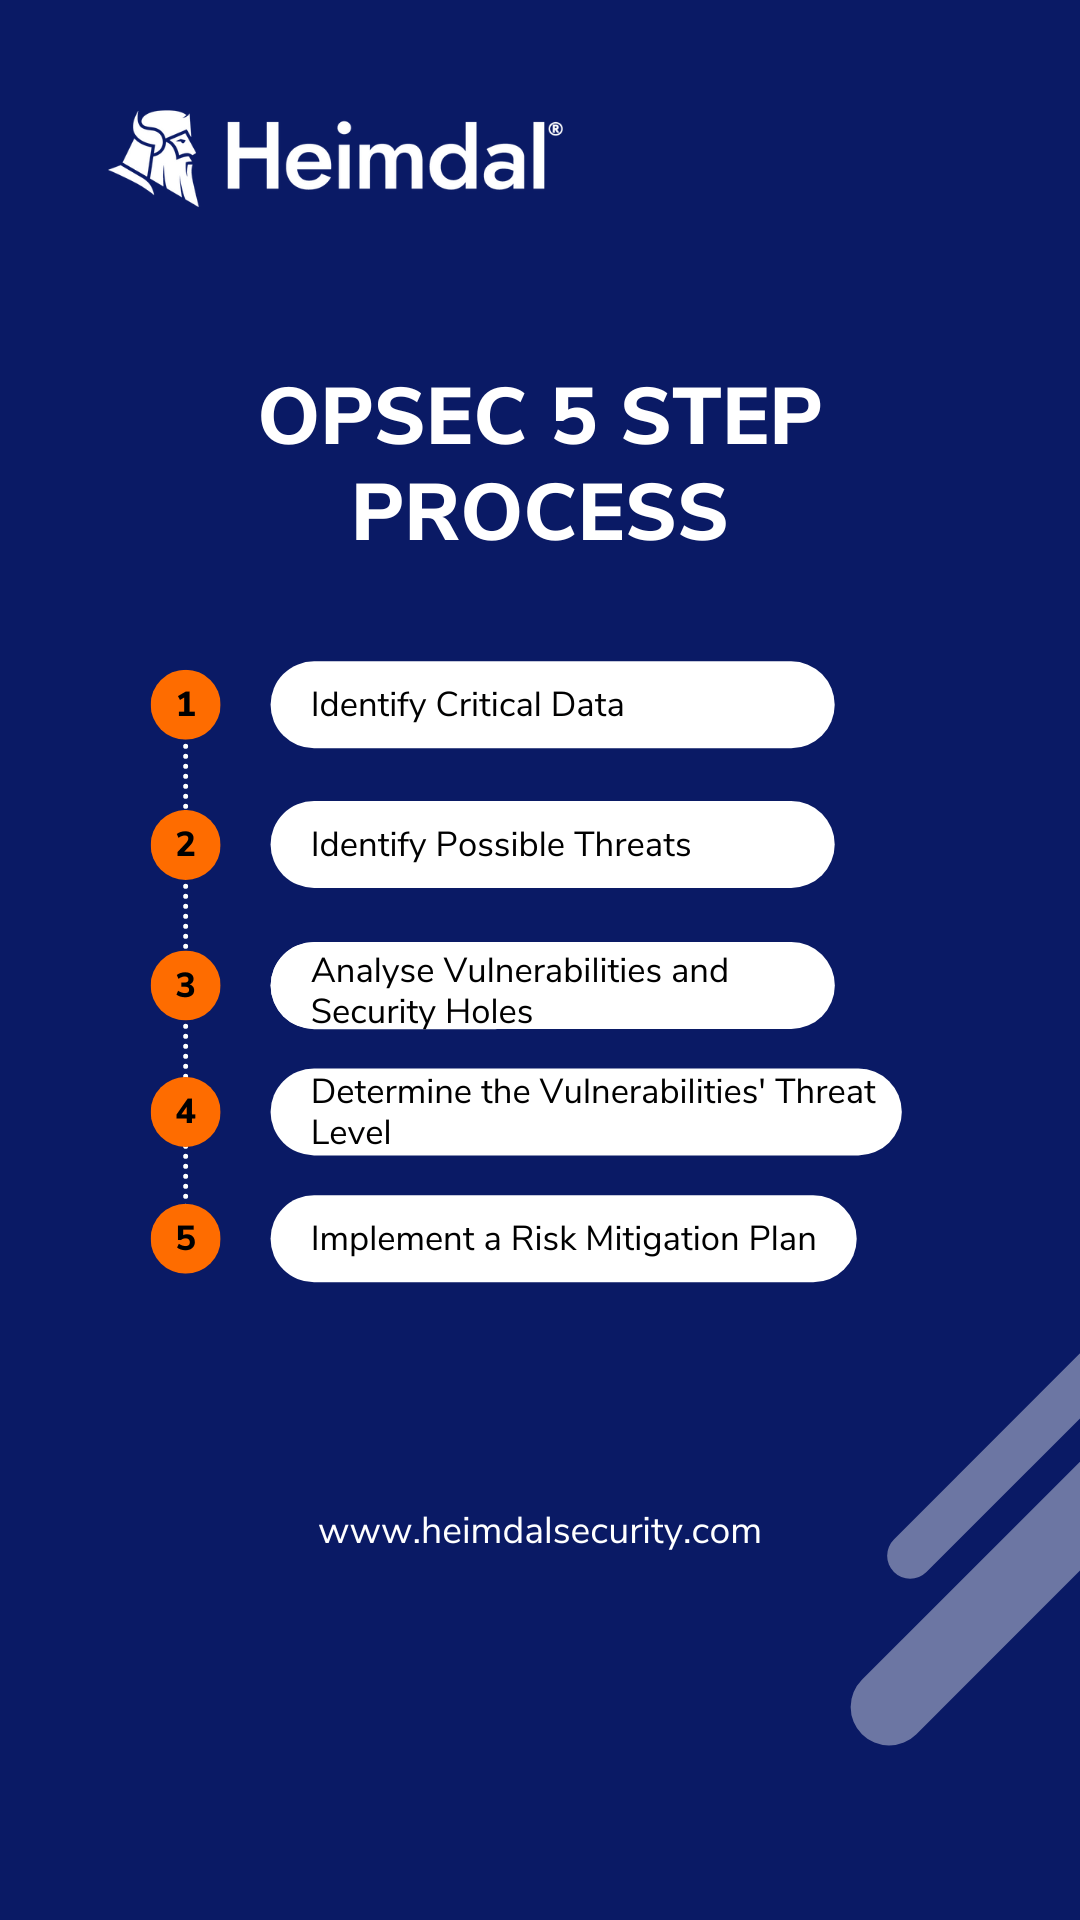 opsec 5 step process